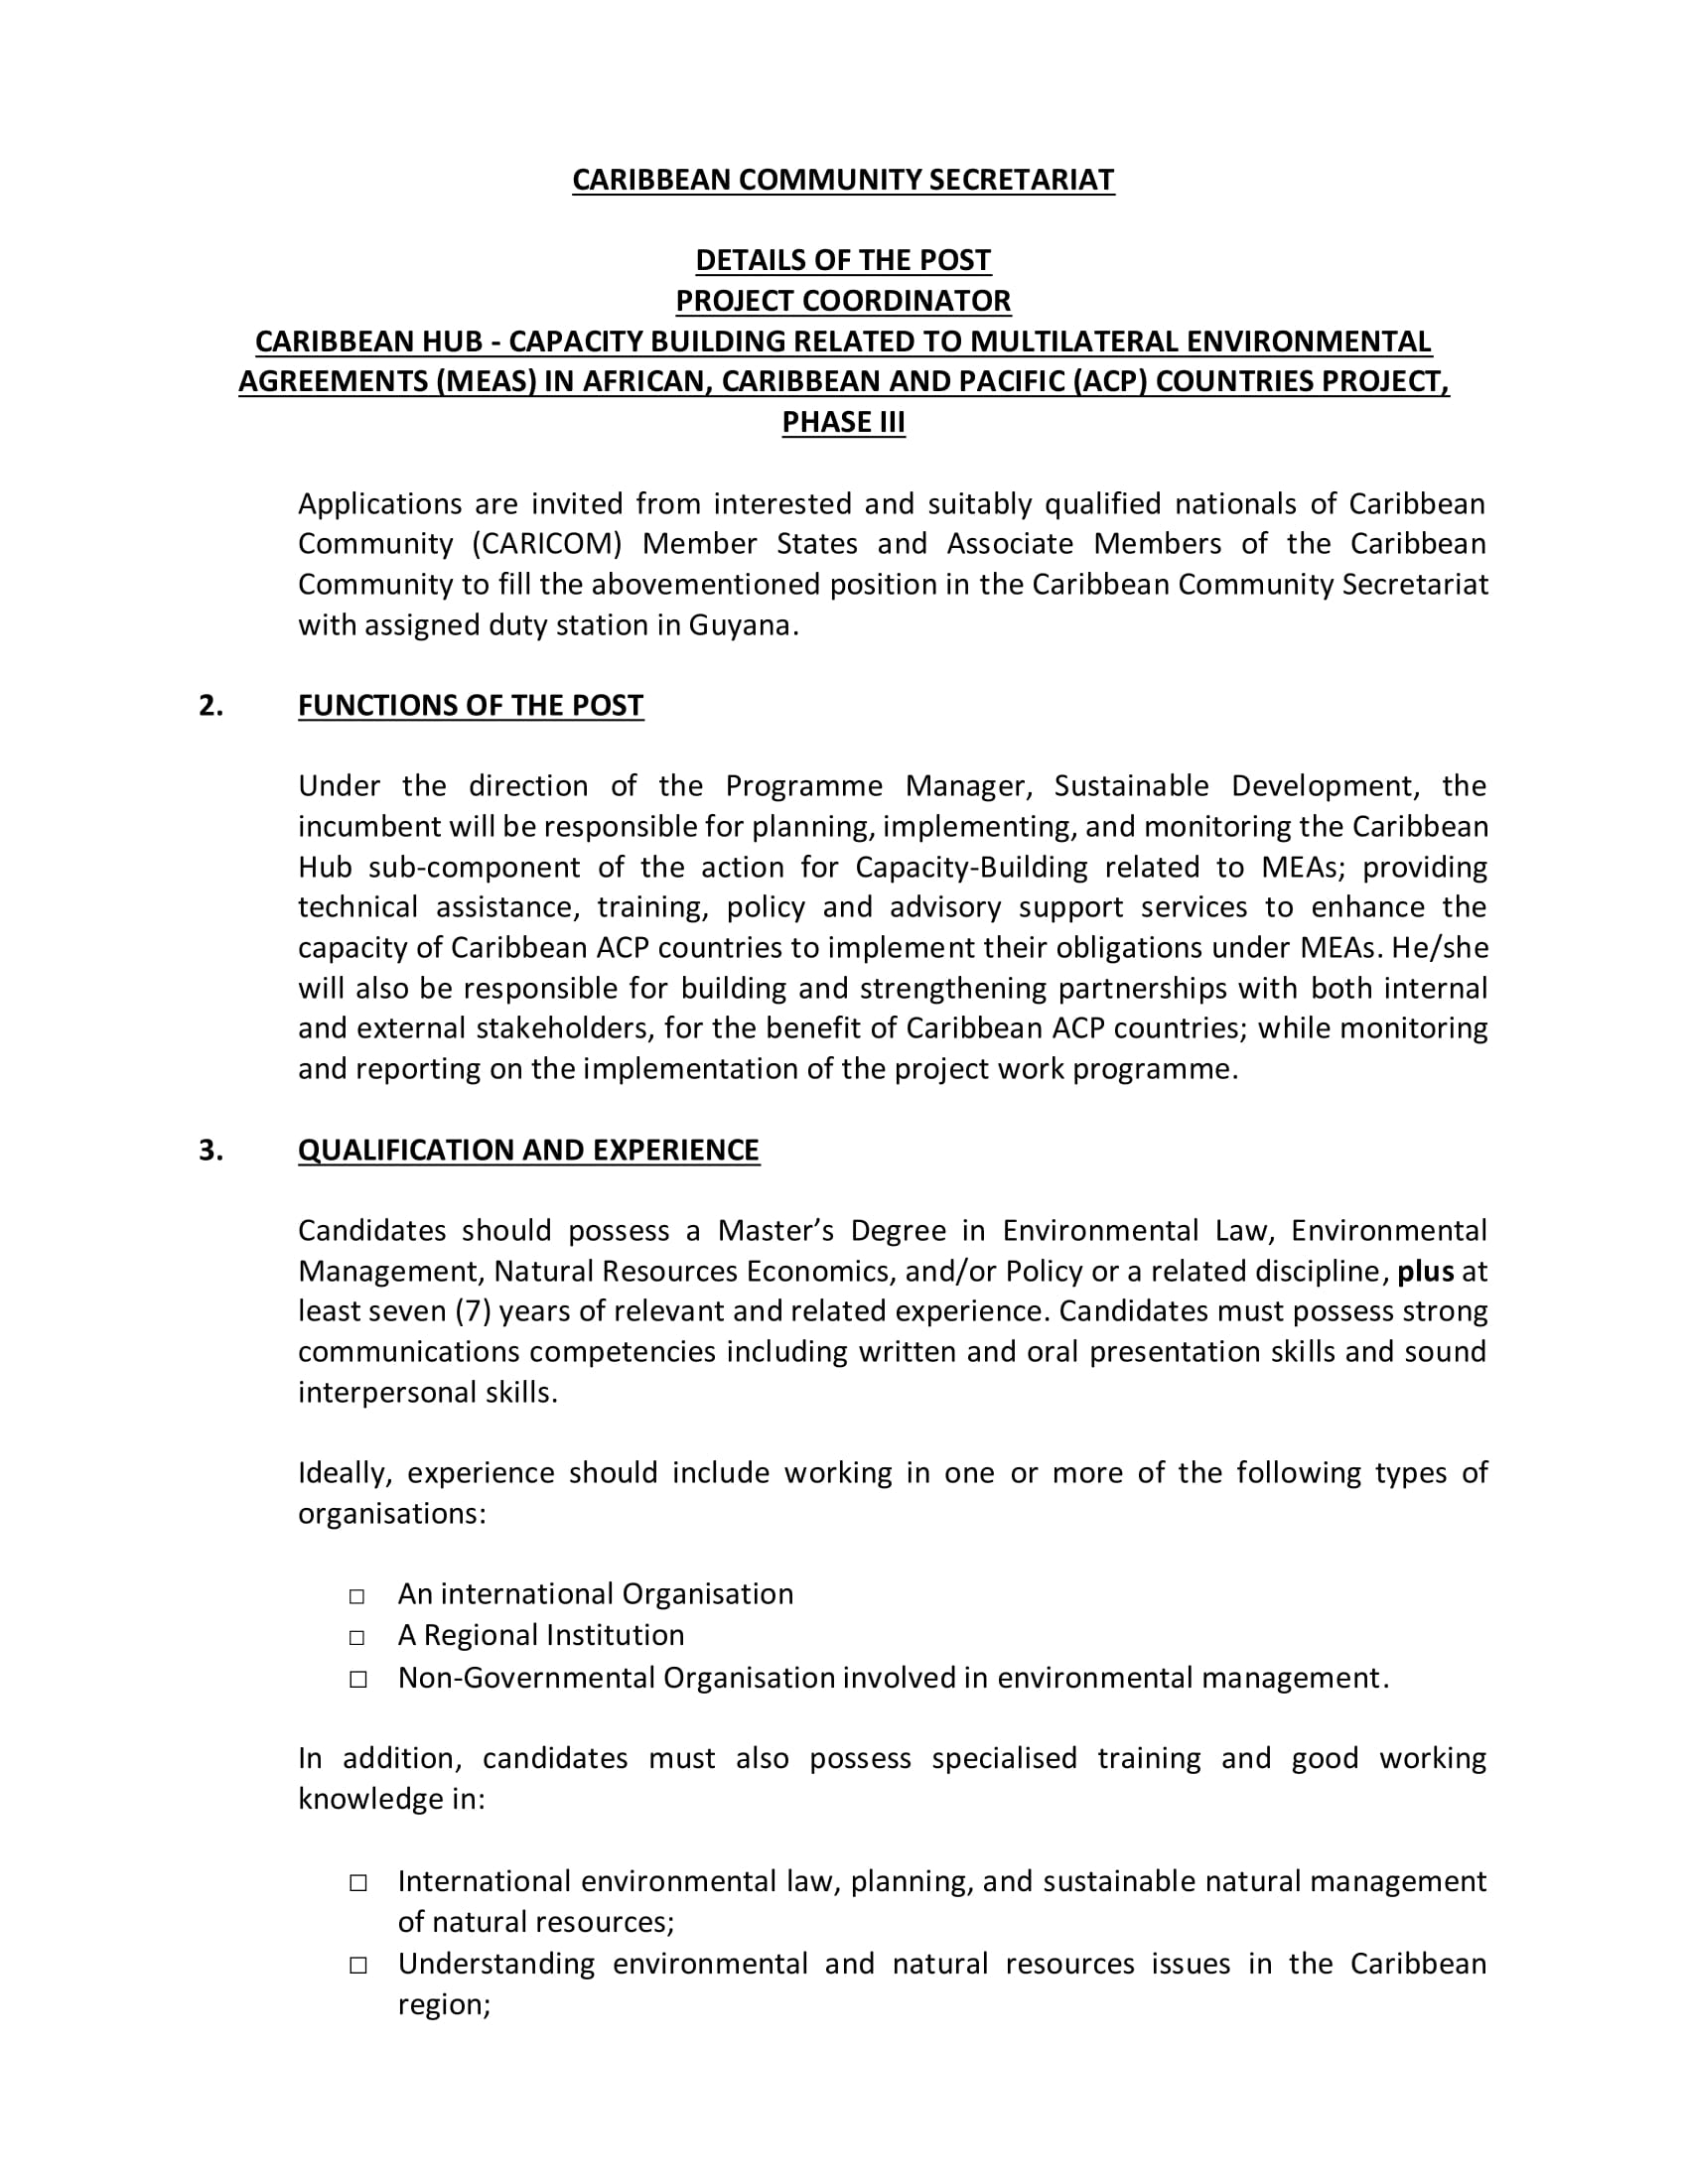 International Agreement On Environmental Management Caricom Project Coordinator Caribbean Hub Capacity Building